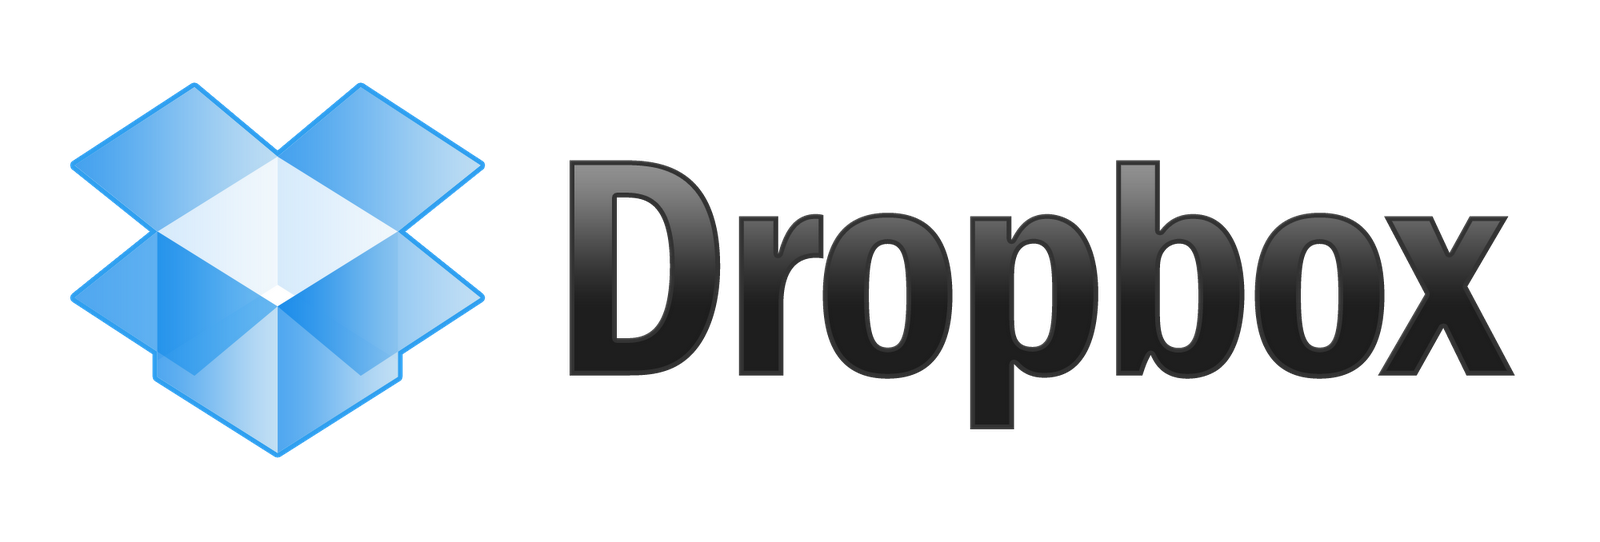 Dropbox-Logo1